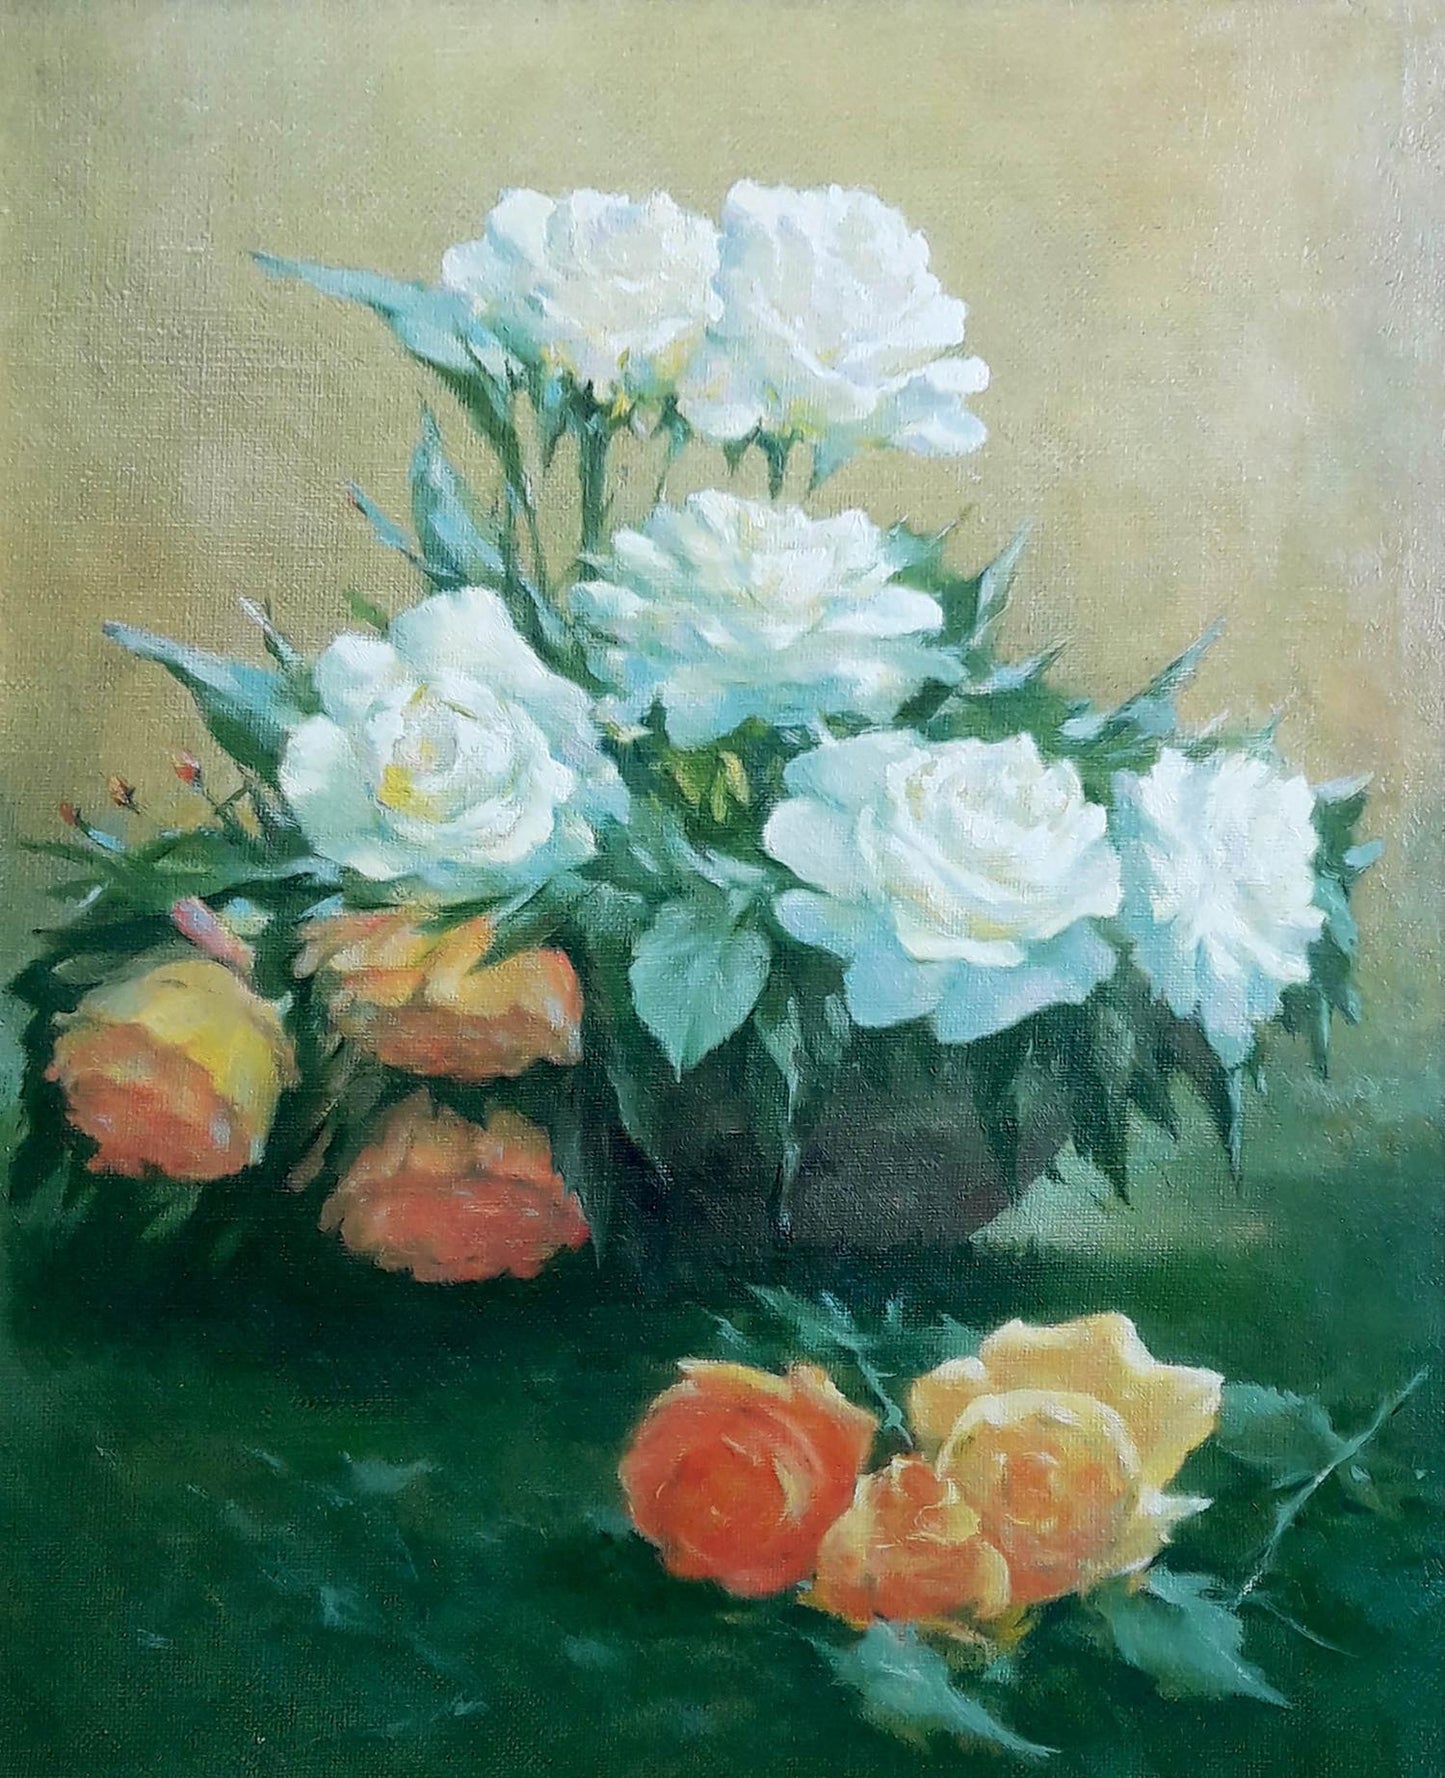 Oil painting White and yellow roses in a vase Vasily Korkishko